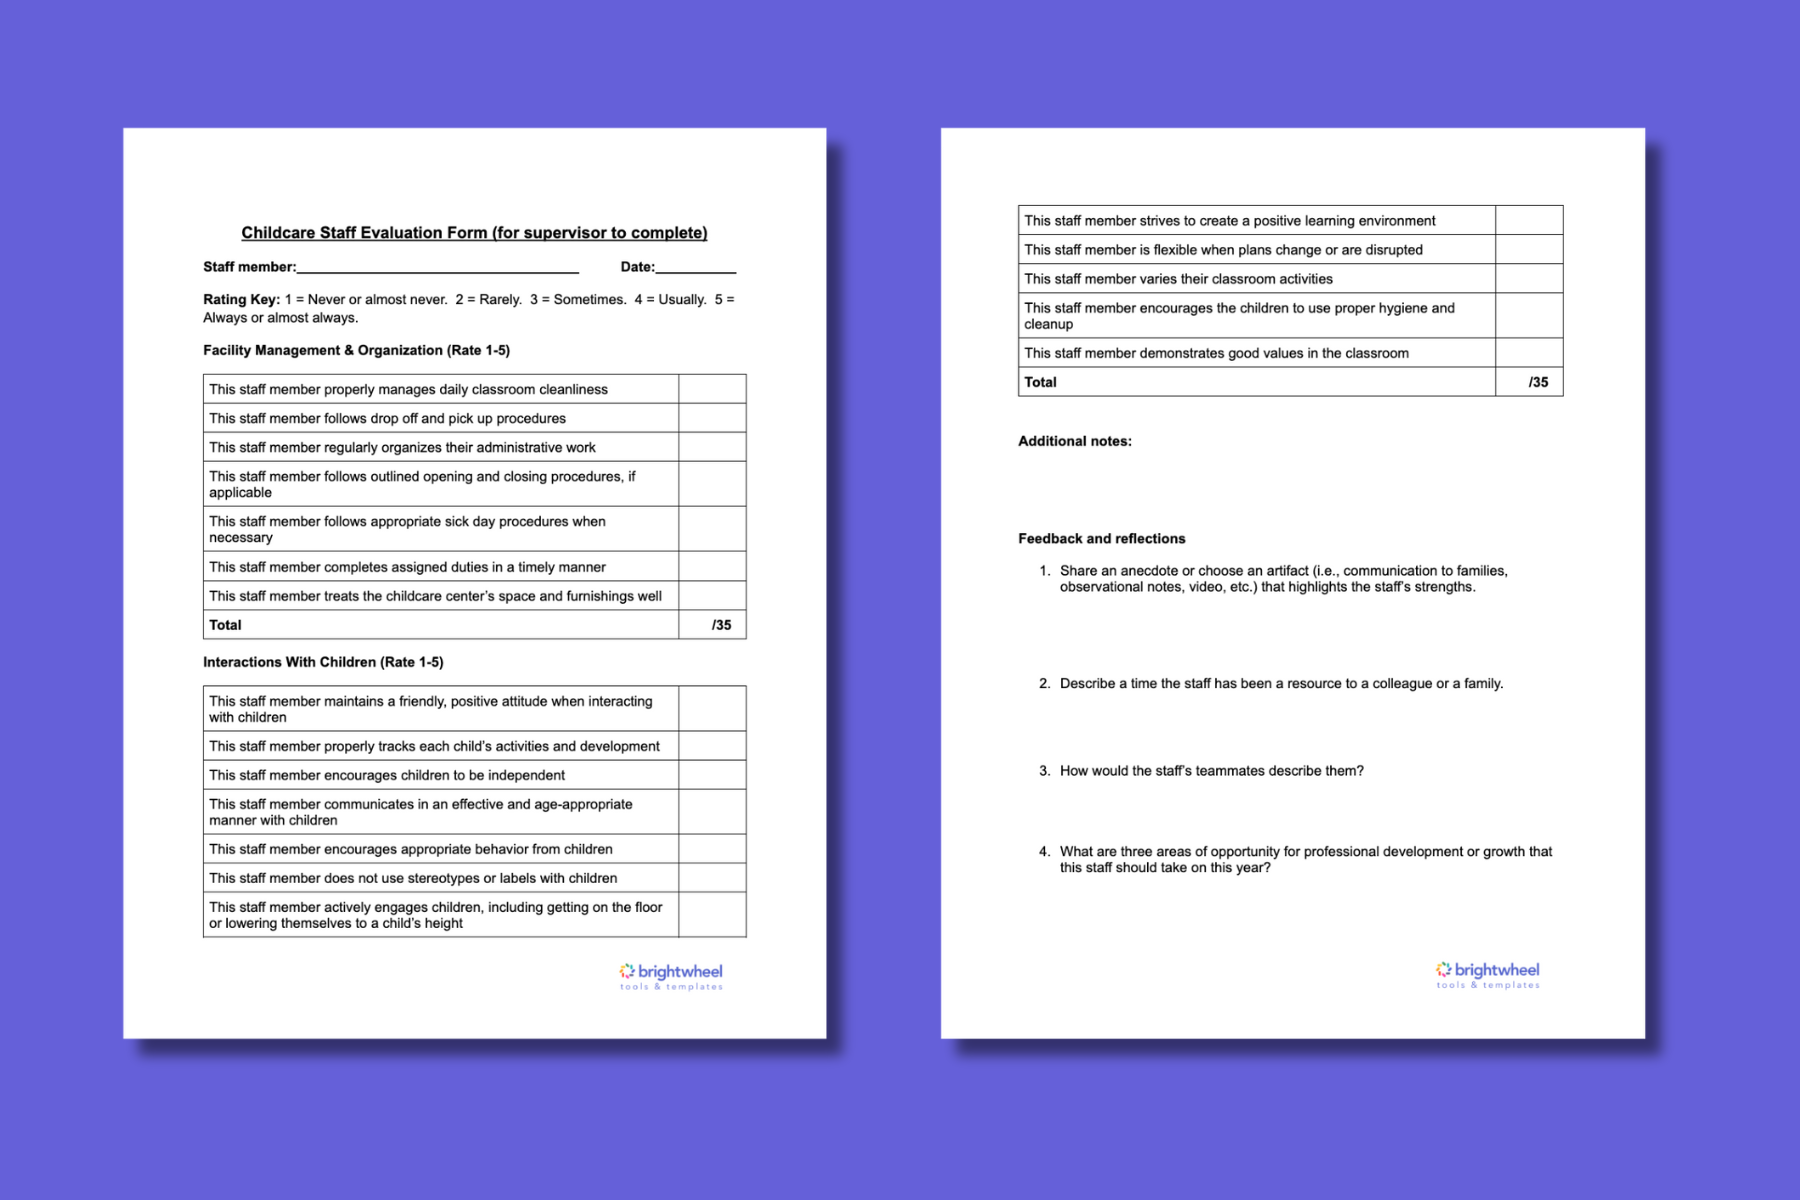 Childcare Staff Evaluation Forms_Interiors_Brightwheel